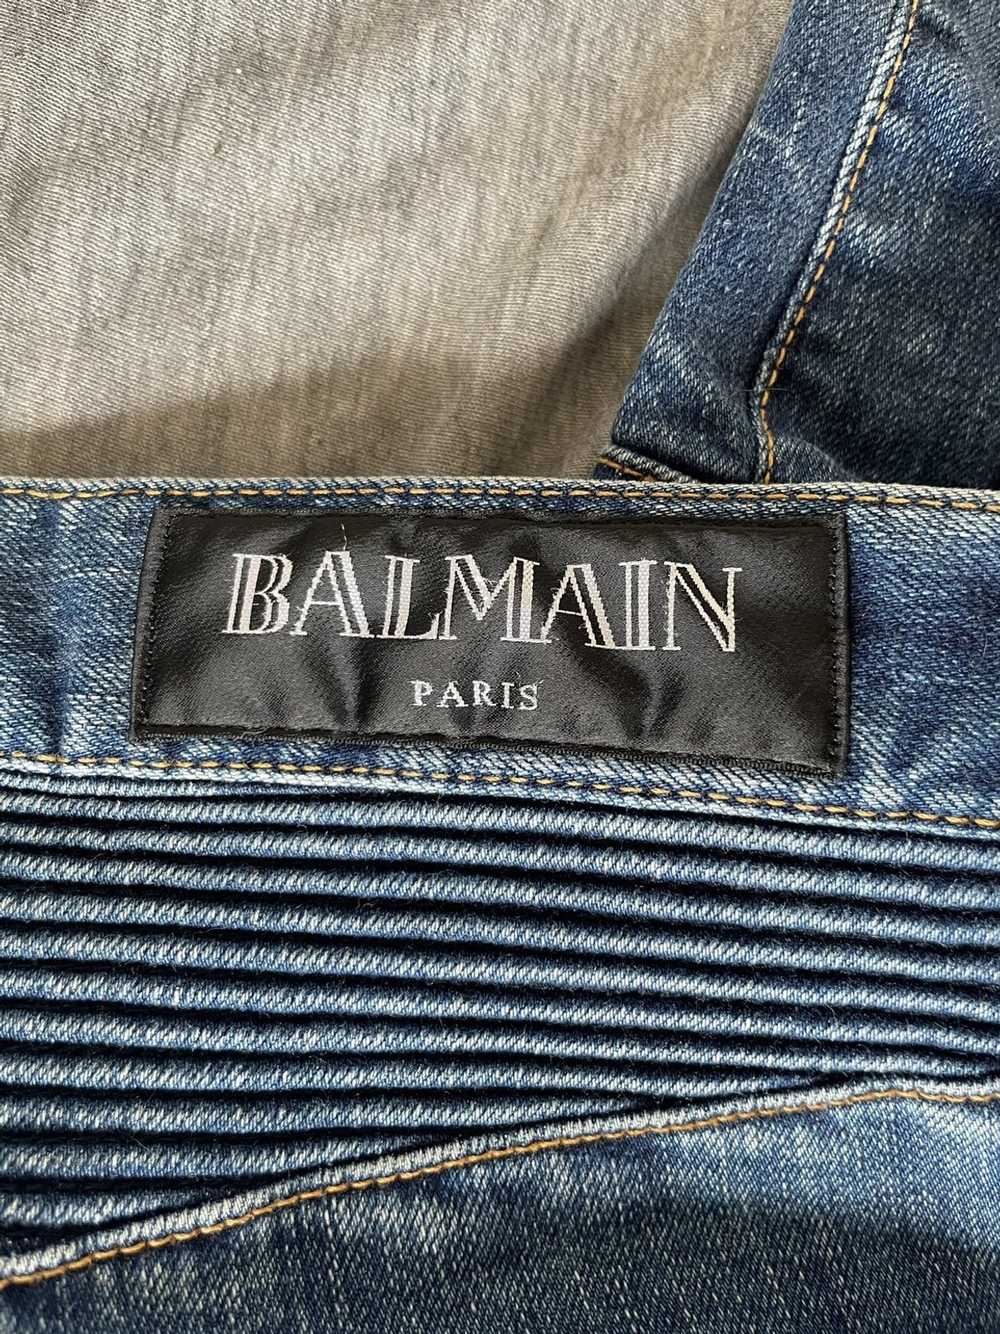 Balmain Balmain classic biker jeans - image 5